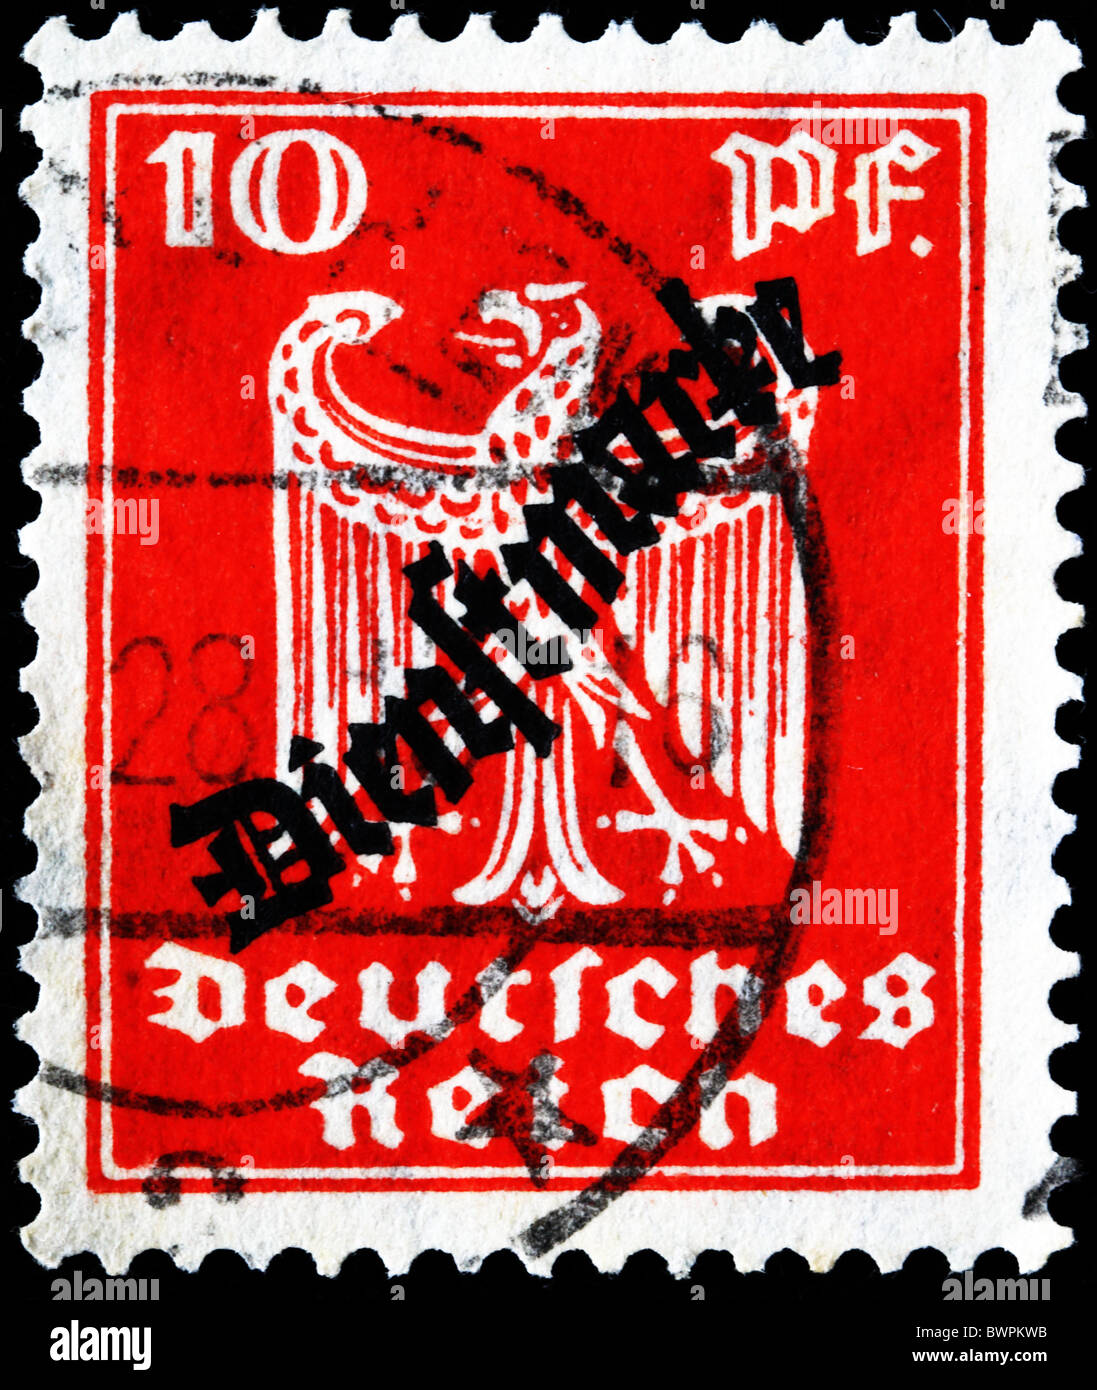 German Empire Thing, ID : 12267050095